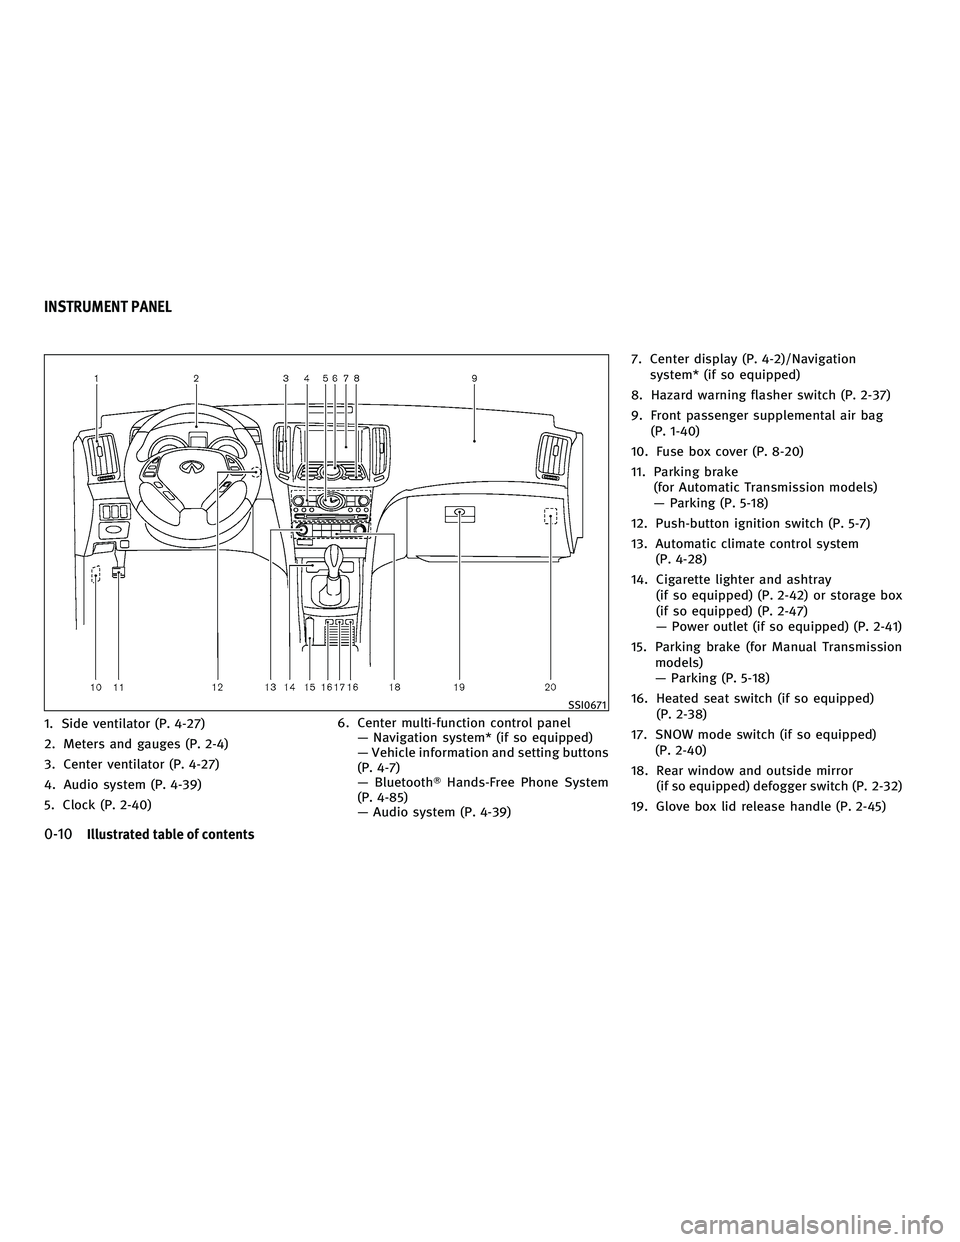 INFINITI G 2010 User Guide 1. Side ventilator (P. 4-27)
2. Meters and gauges (P. 2-4)
3. Center ventilator (P. 4-27)
4. Audio system (P. 4-39)
5. Clock (P. 2-40)6. Center multi-function control panel
— Navigation system* (if 